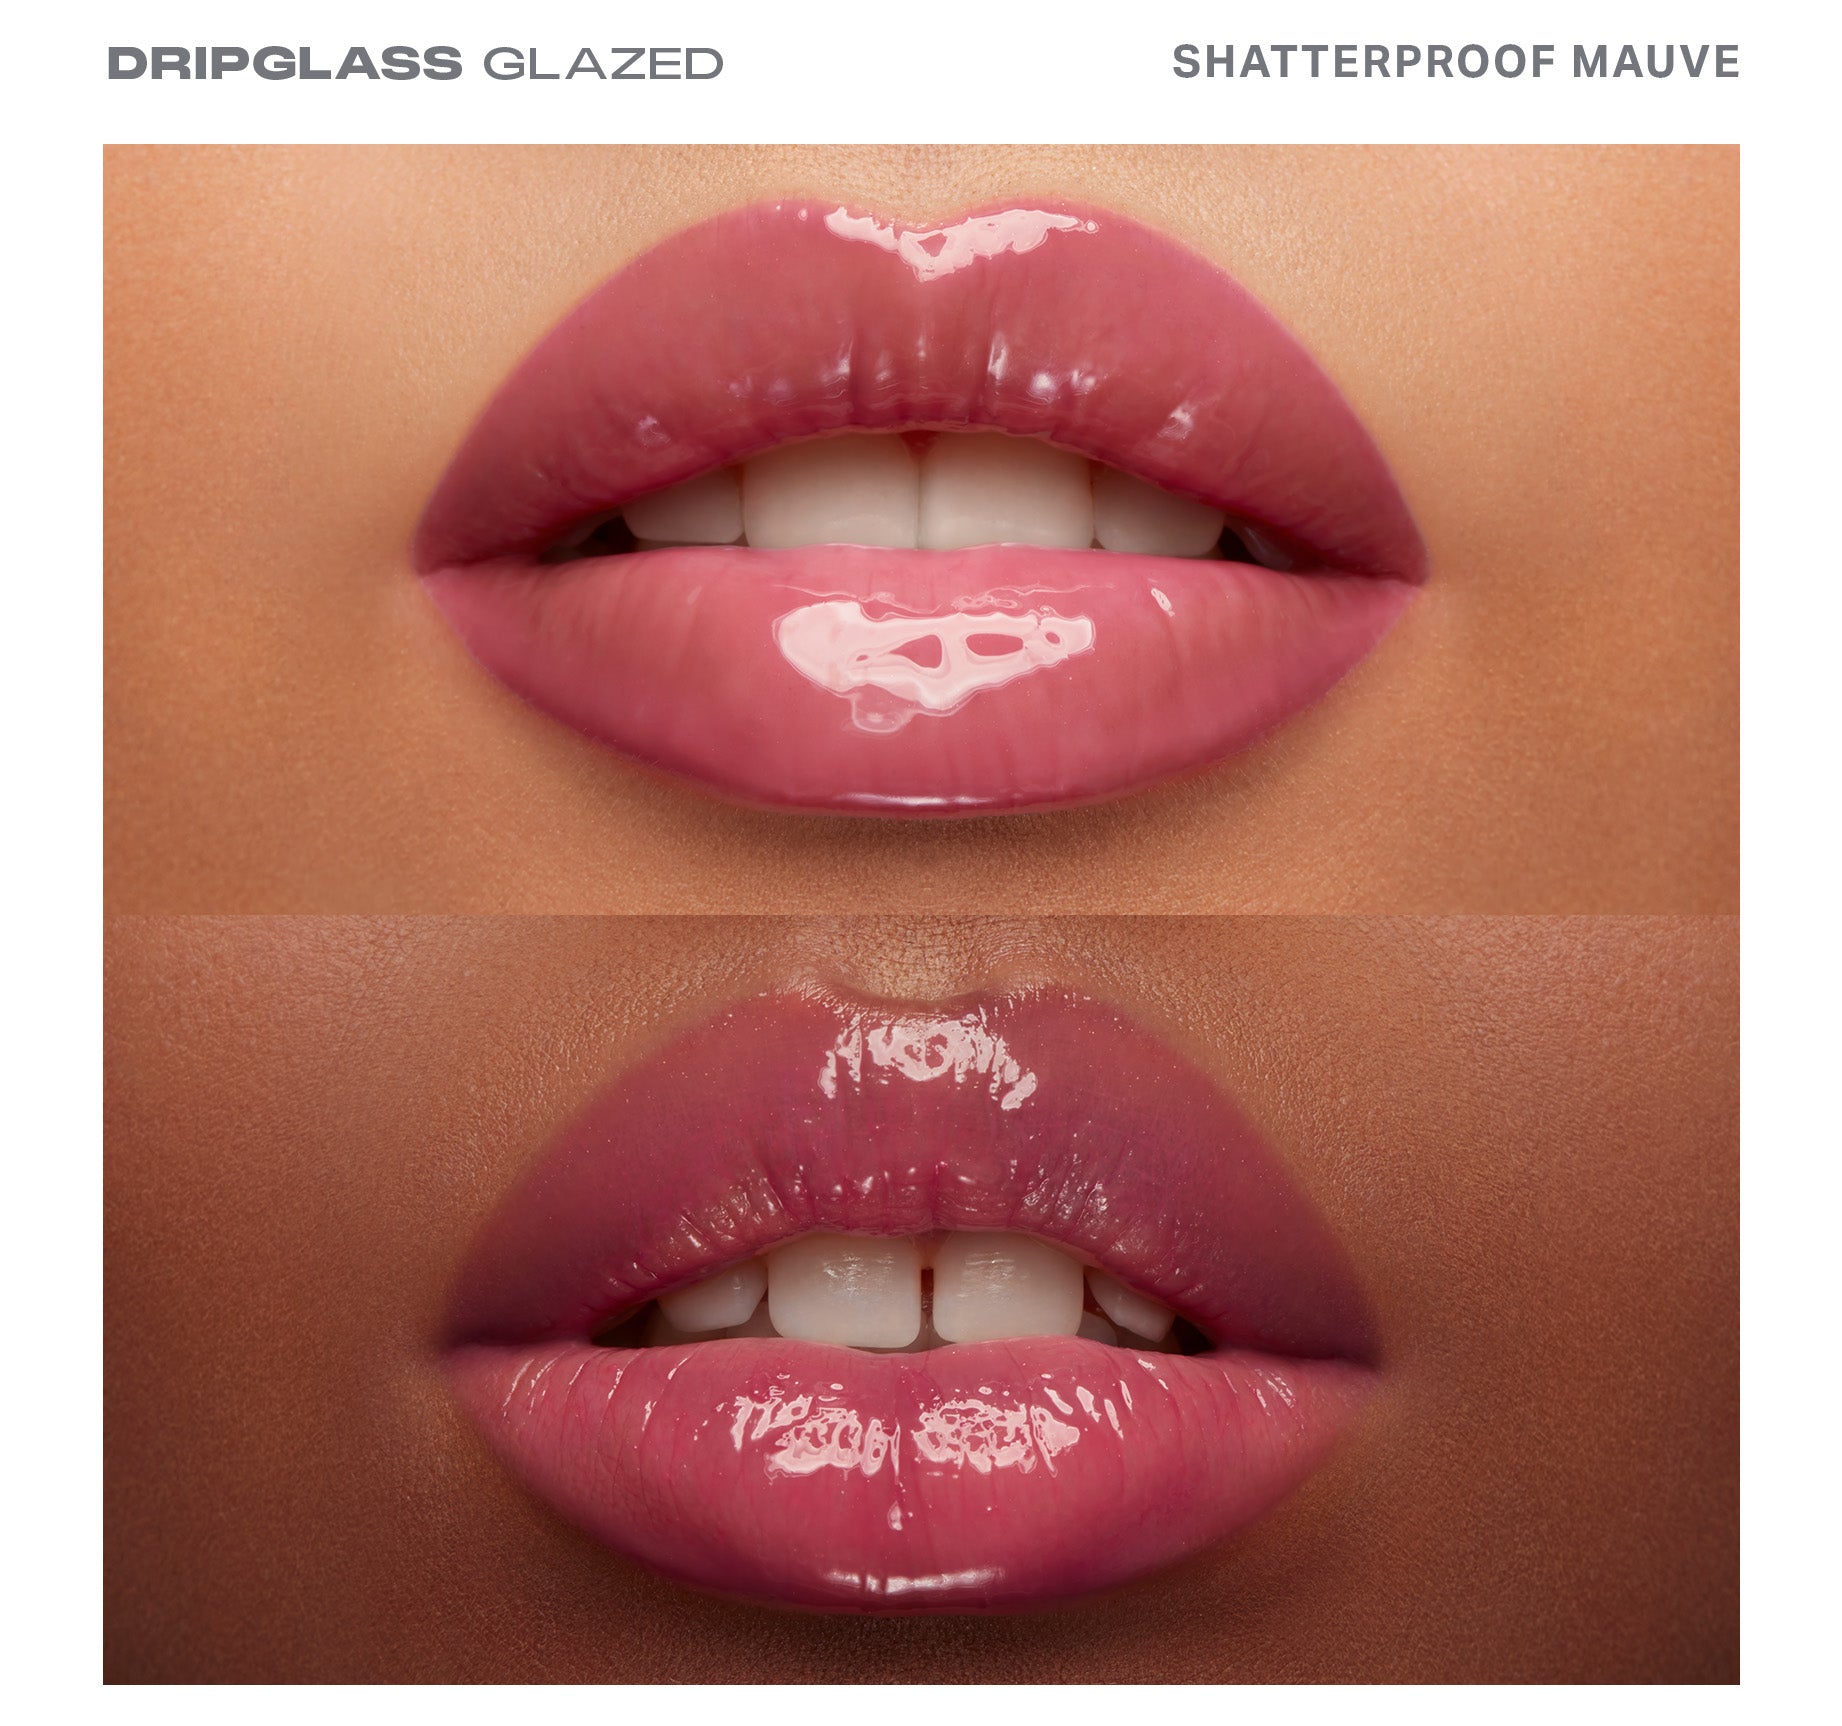 Dripglass Glazed High Shine Lip Gloss - Shatterproof Mauve - Image 3